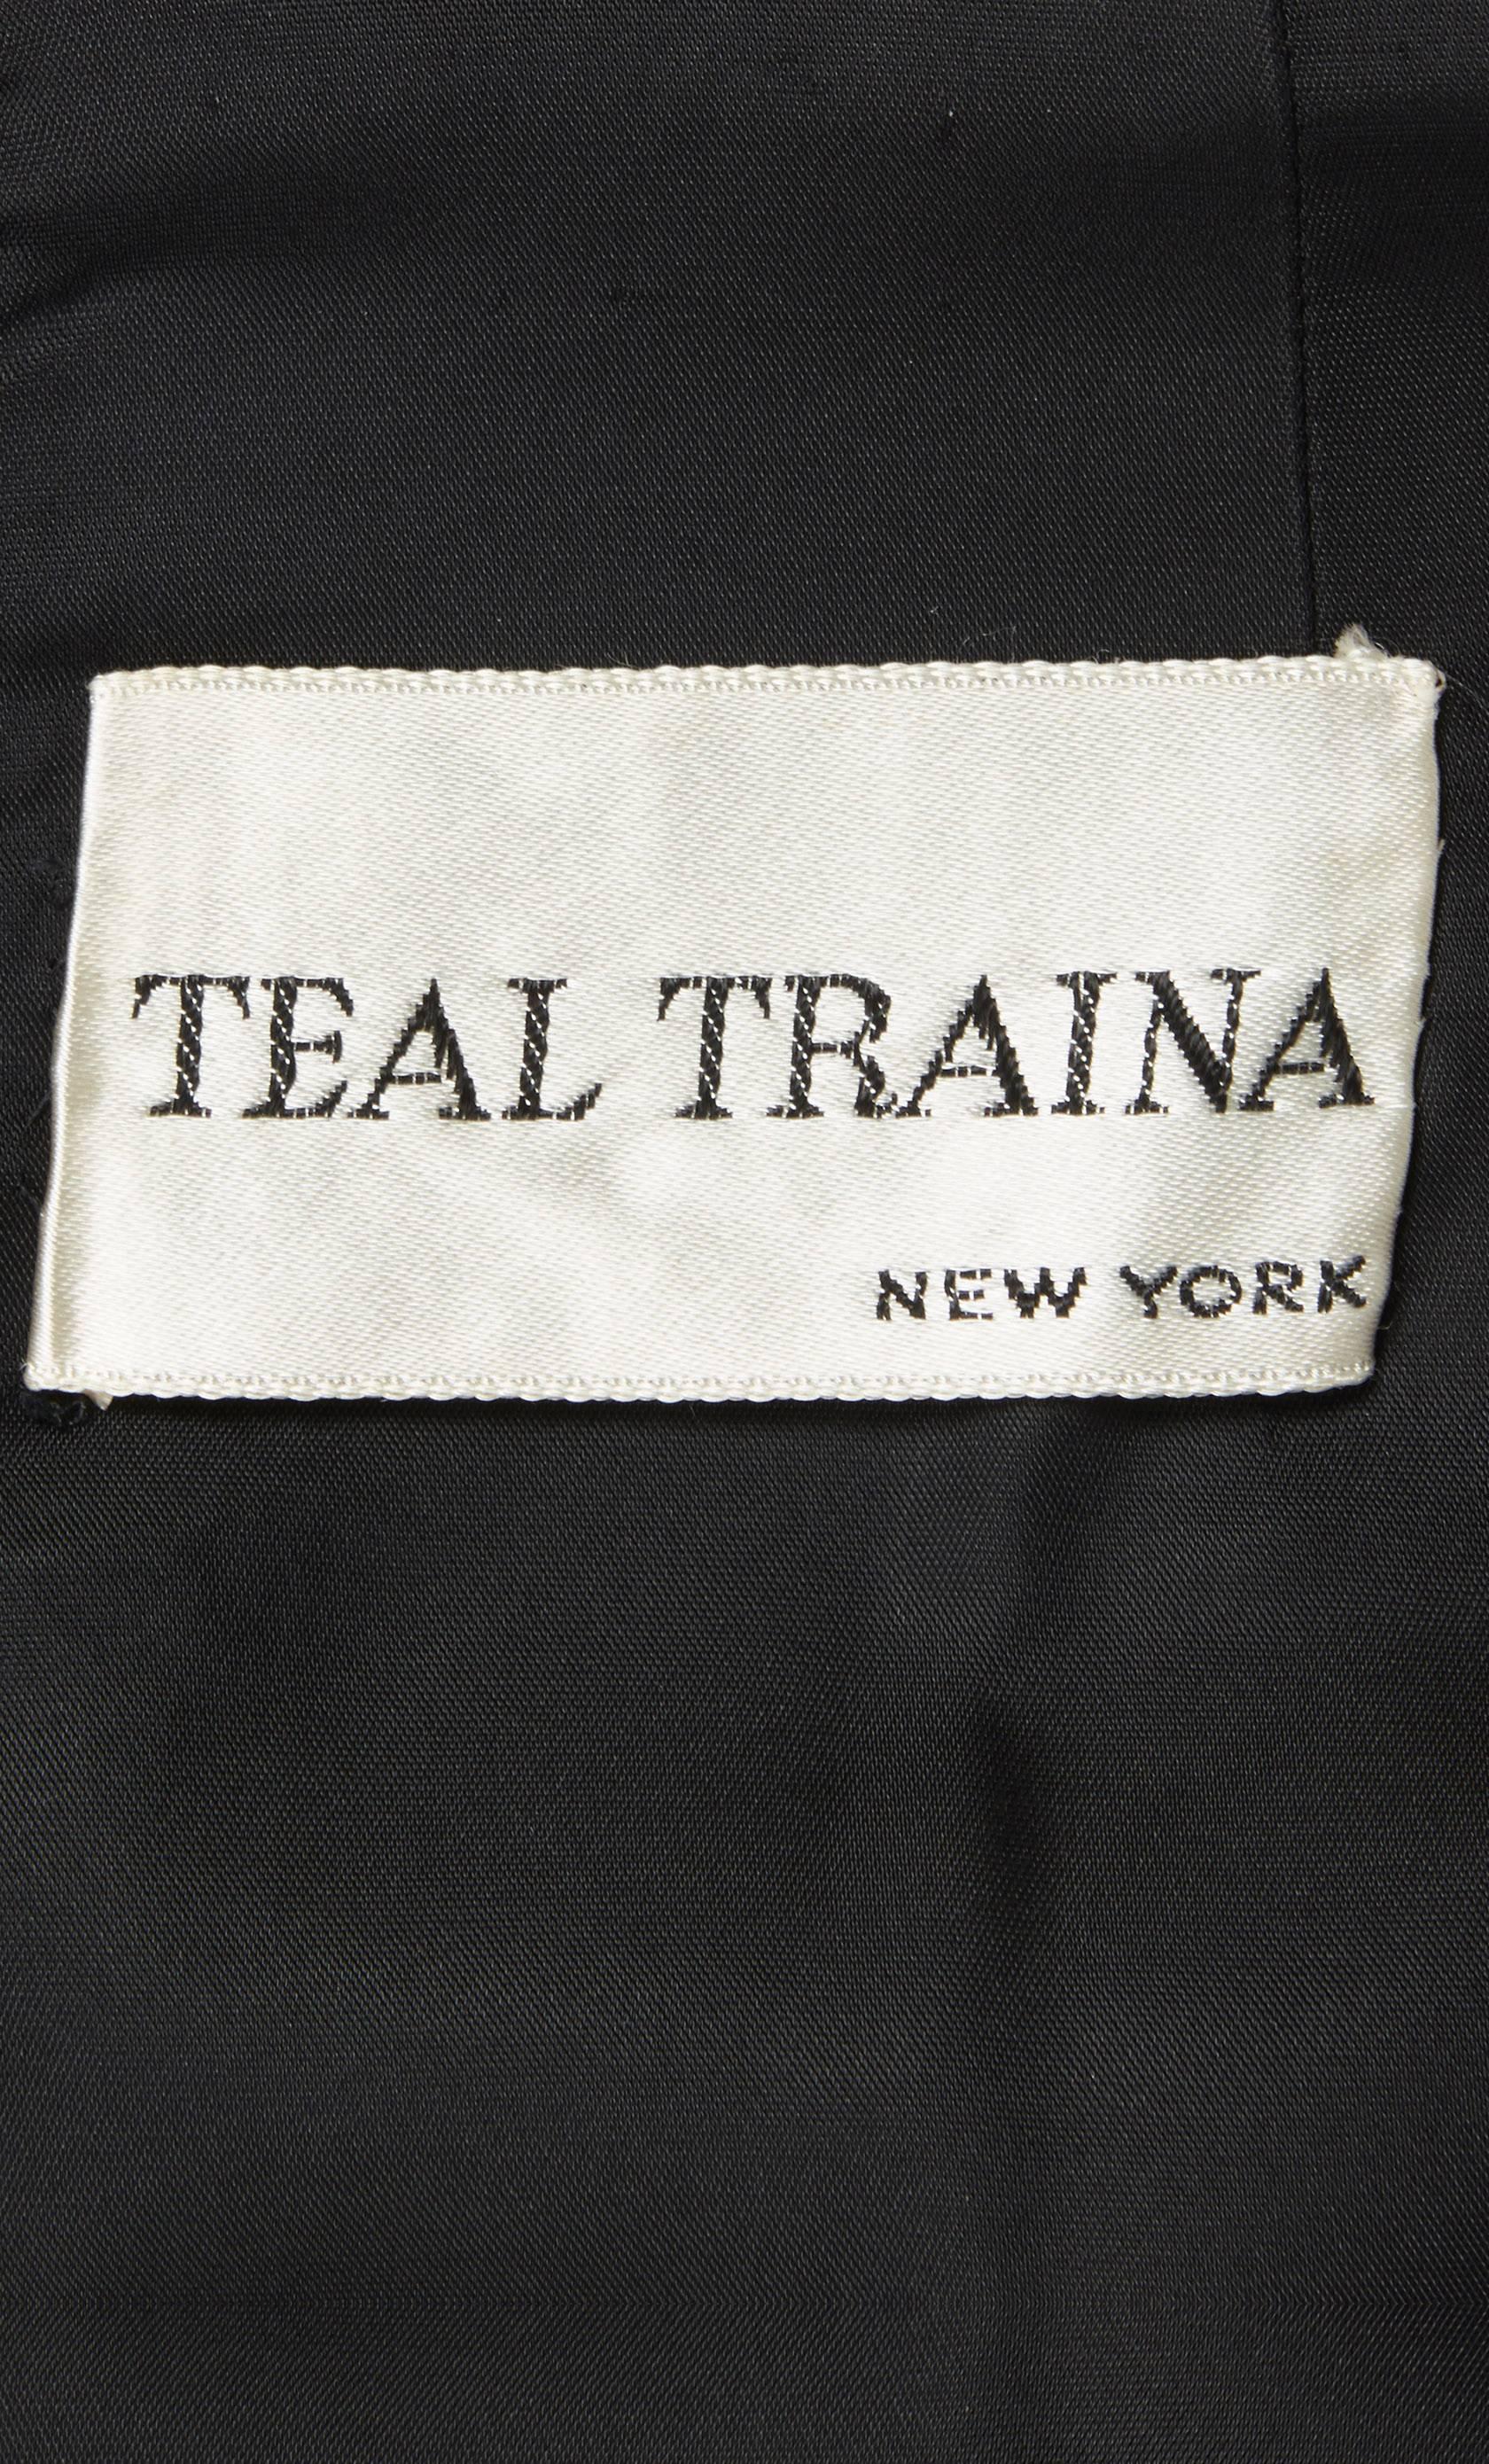 Women's Teal Traina black dress, circa 1968 For Sale